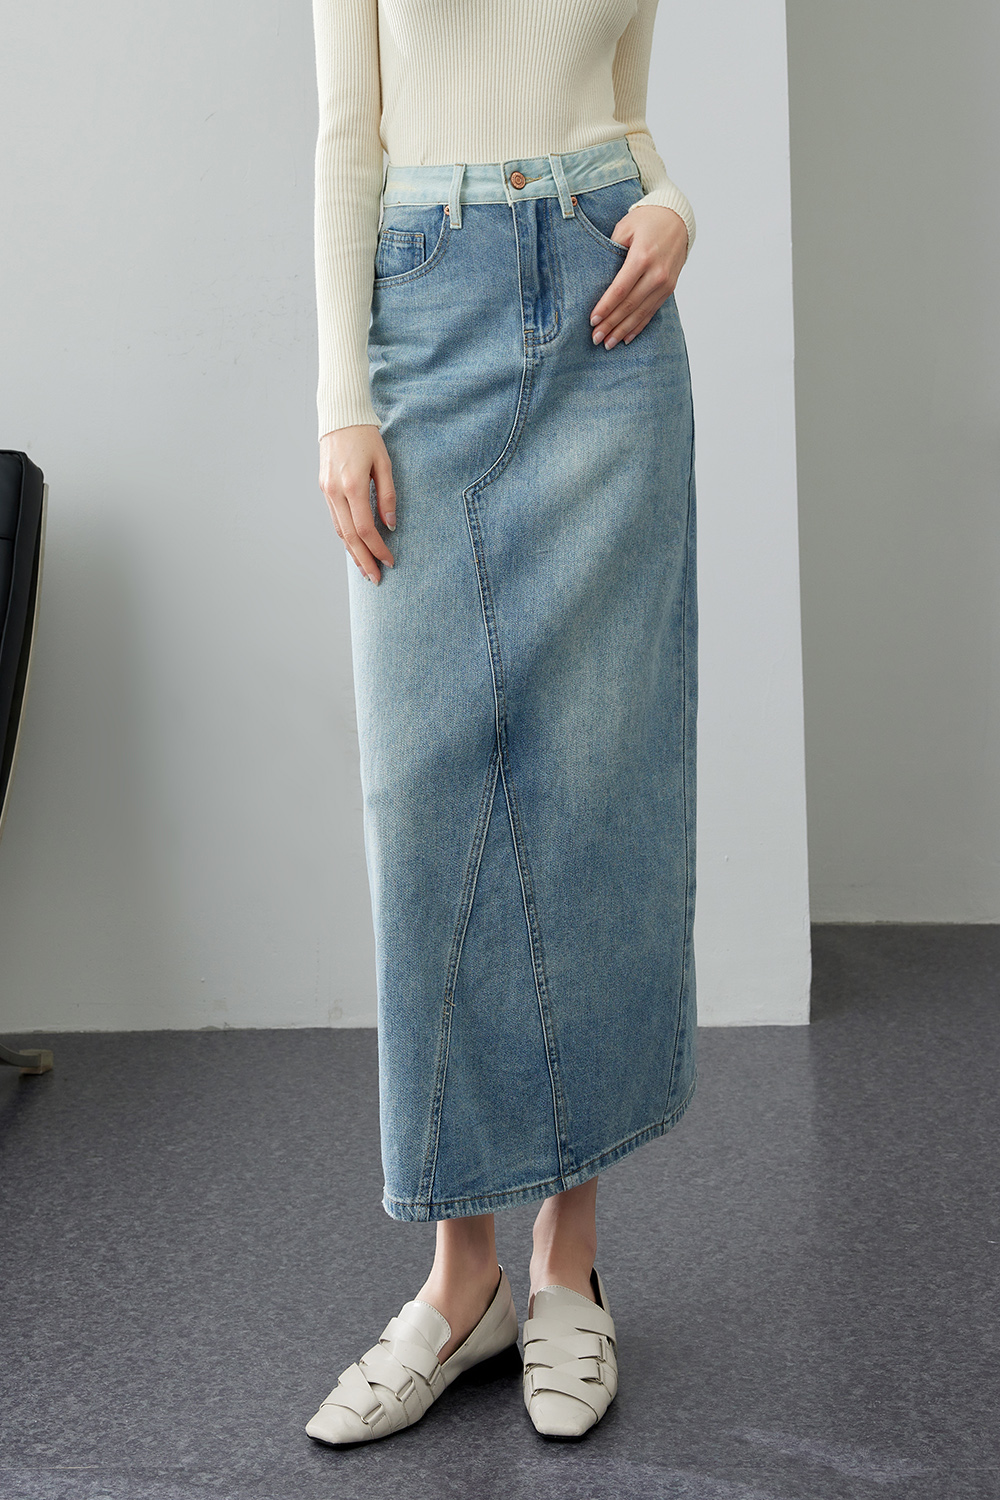 Distressed A-line denim skirt